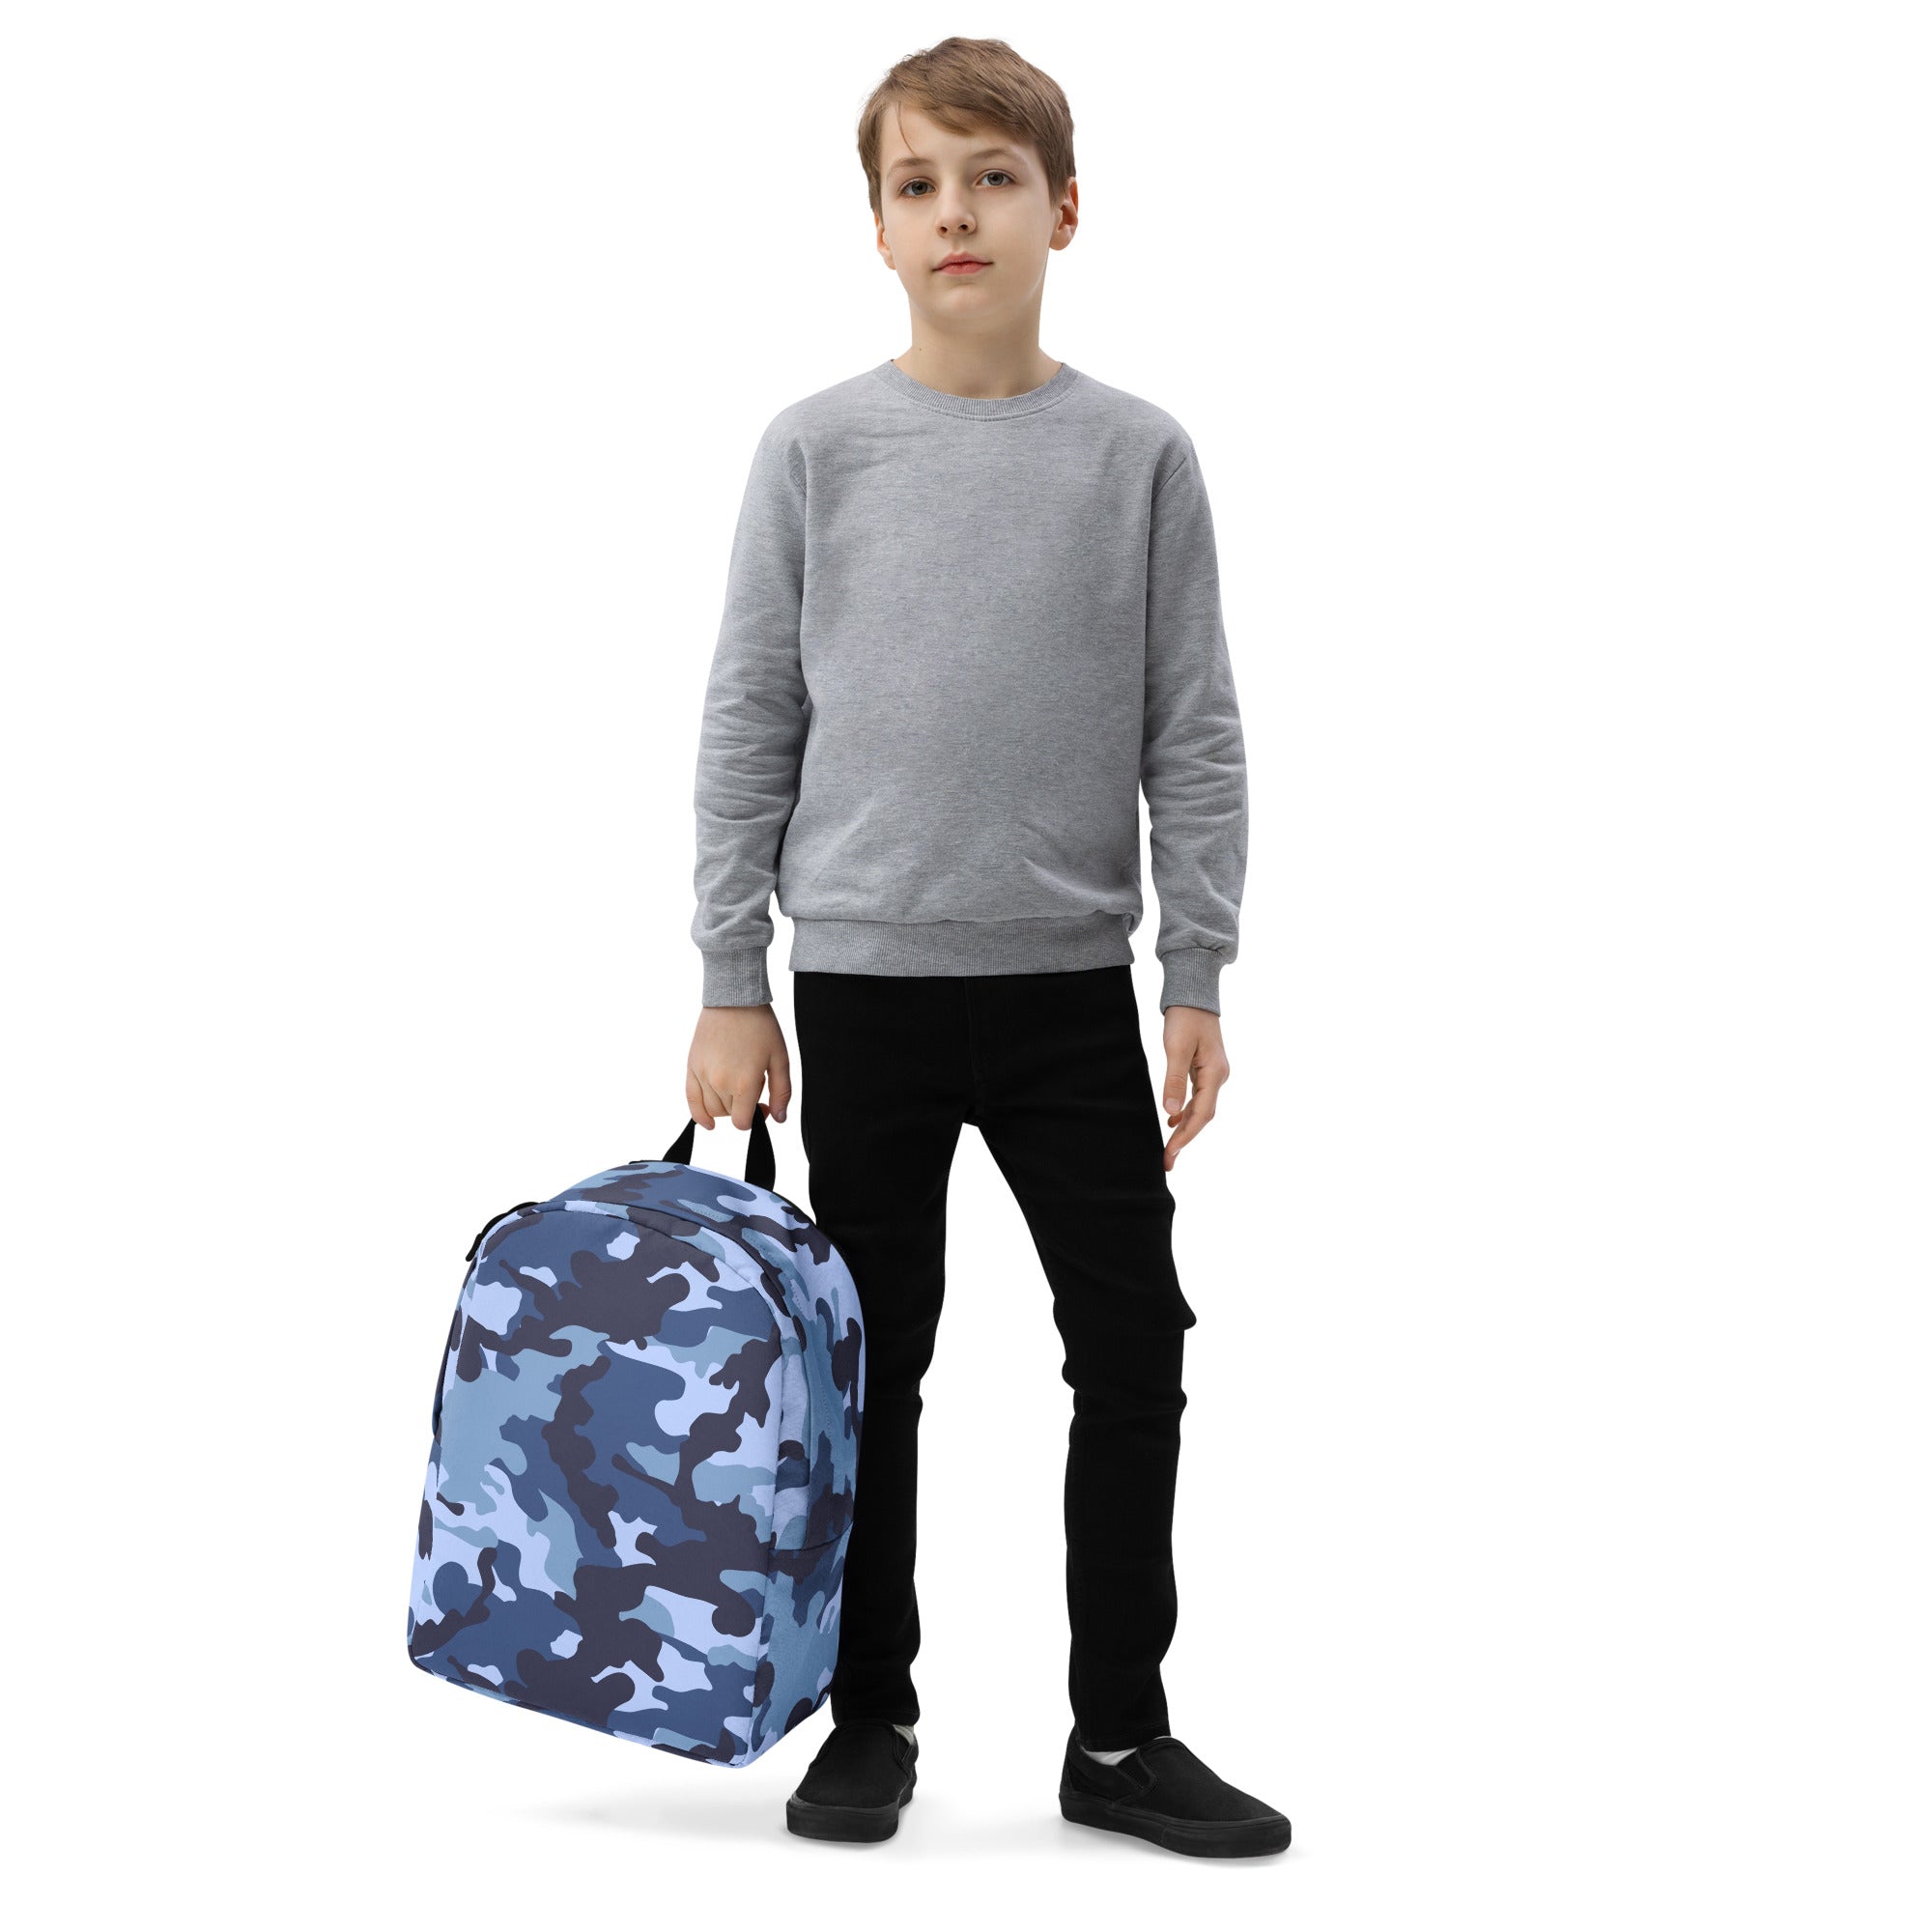 Minimalist Backpack- Camo Blue And Black